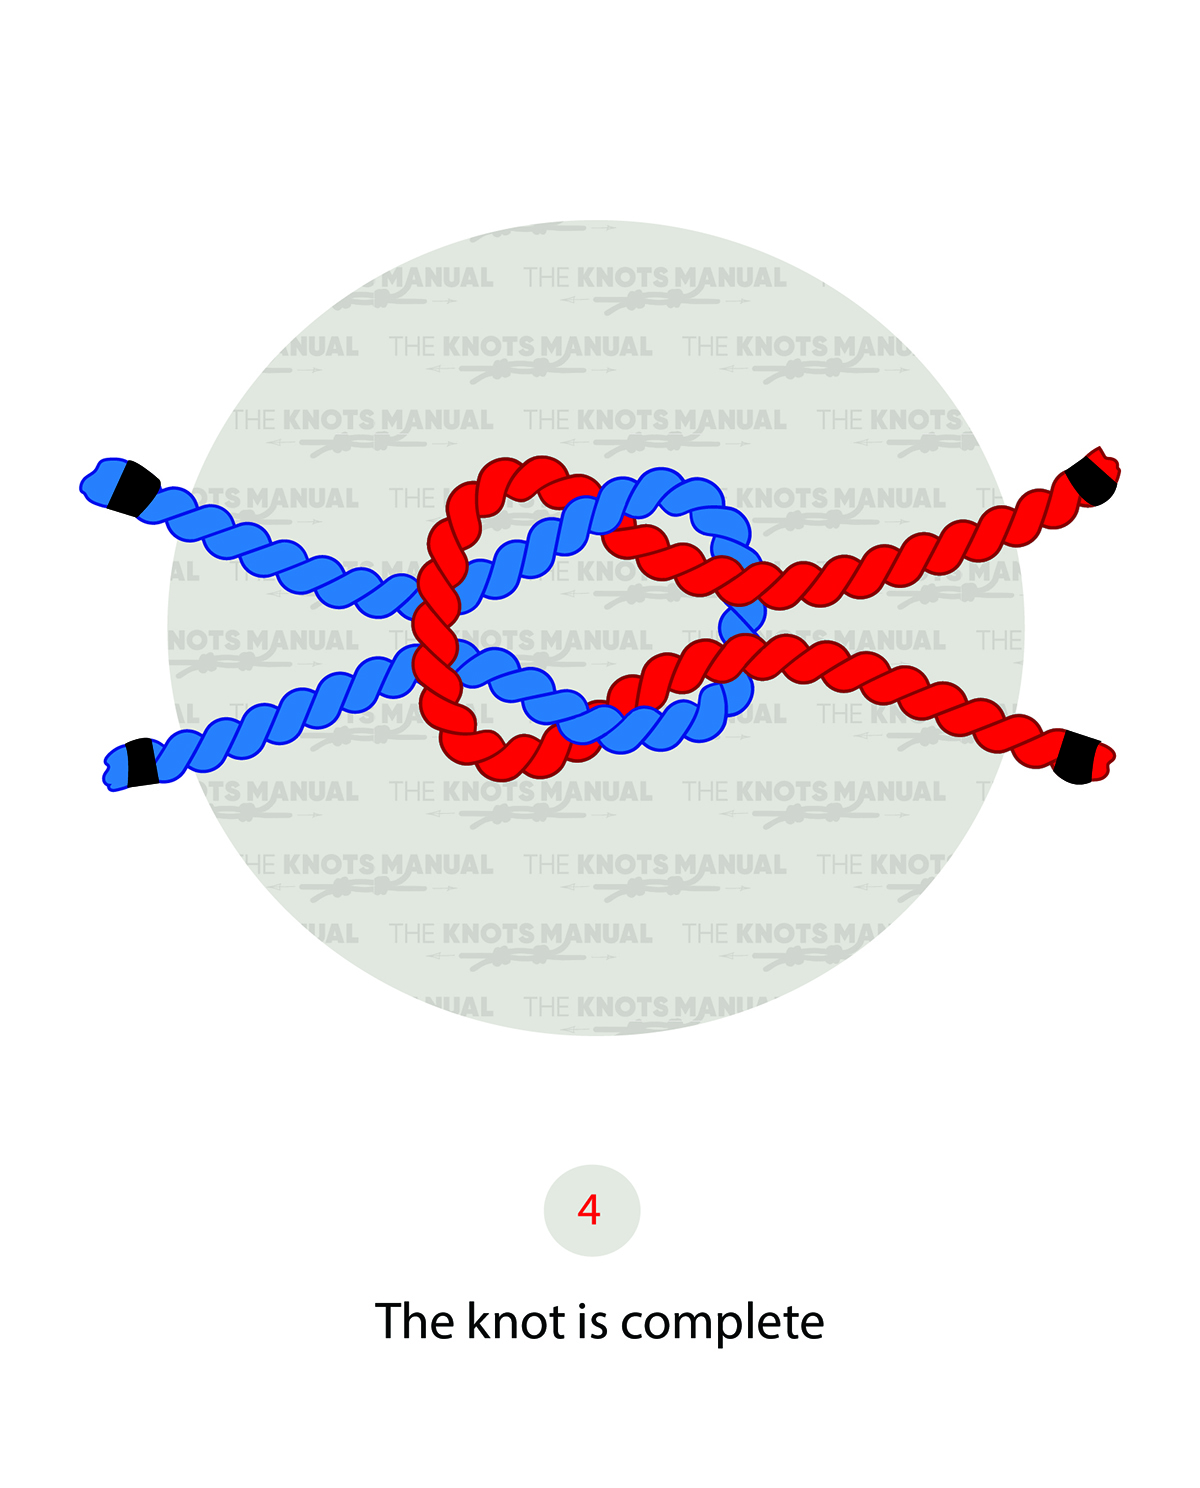 https://www.theknotsmanual.com/wp-content/uploads/knots/square-knot/Square-Knot-Step-4.jpg